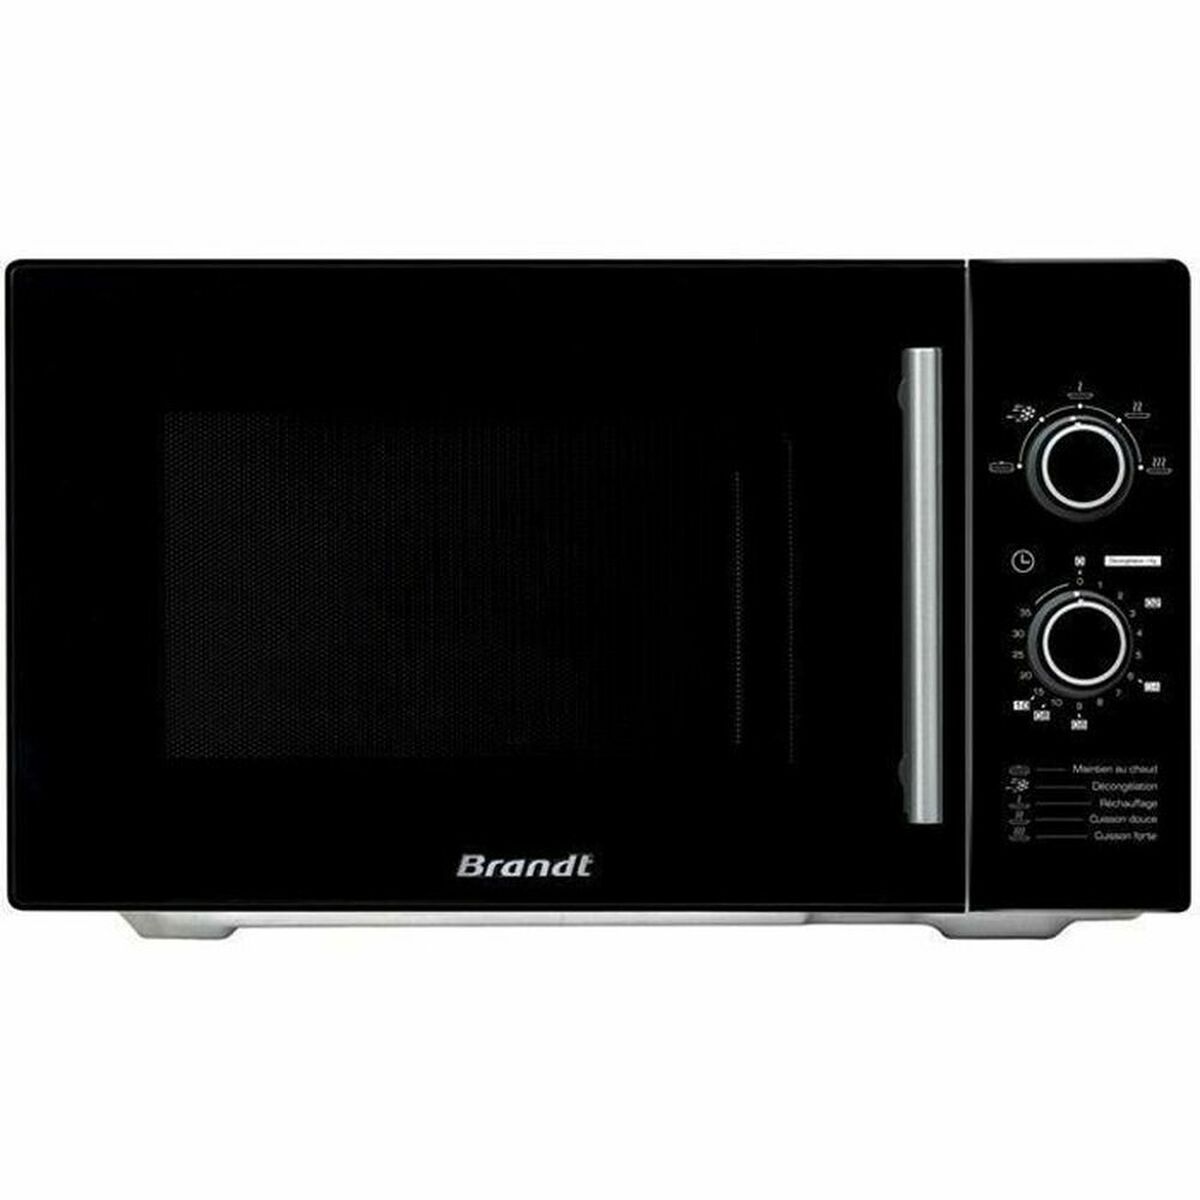 Microwave Brandt 26 L 900 W